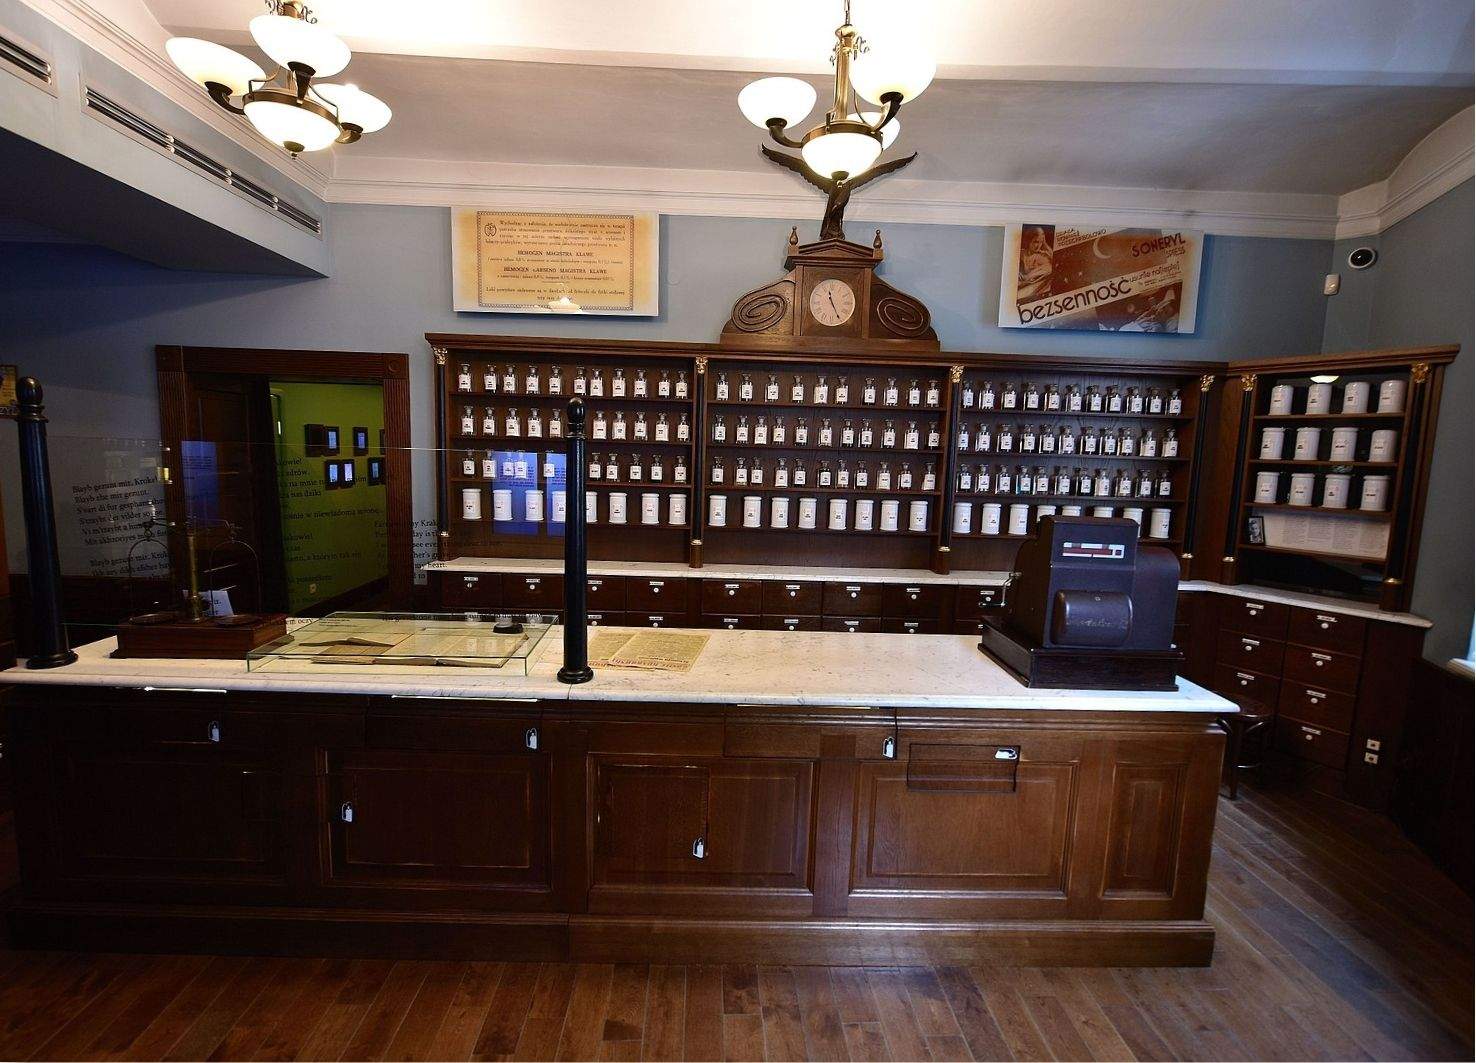 The krakow ghetto pharmacy (The Eagle Pharmacy)